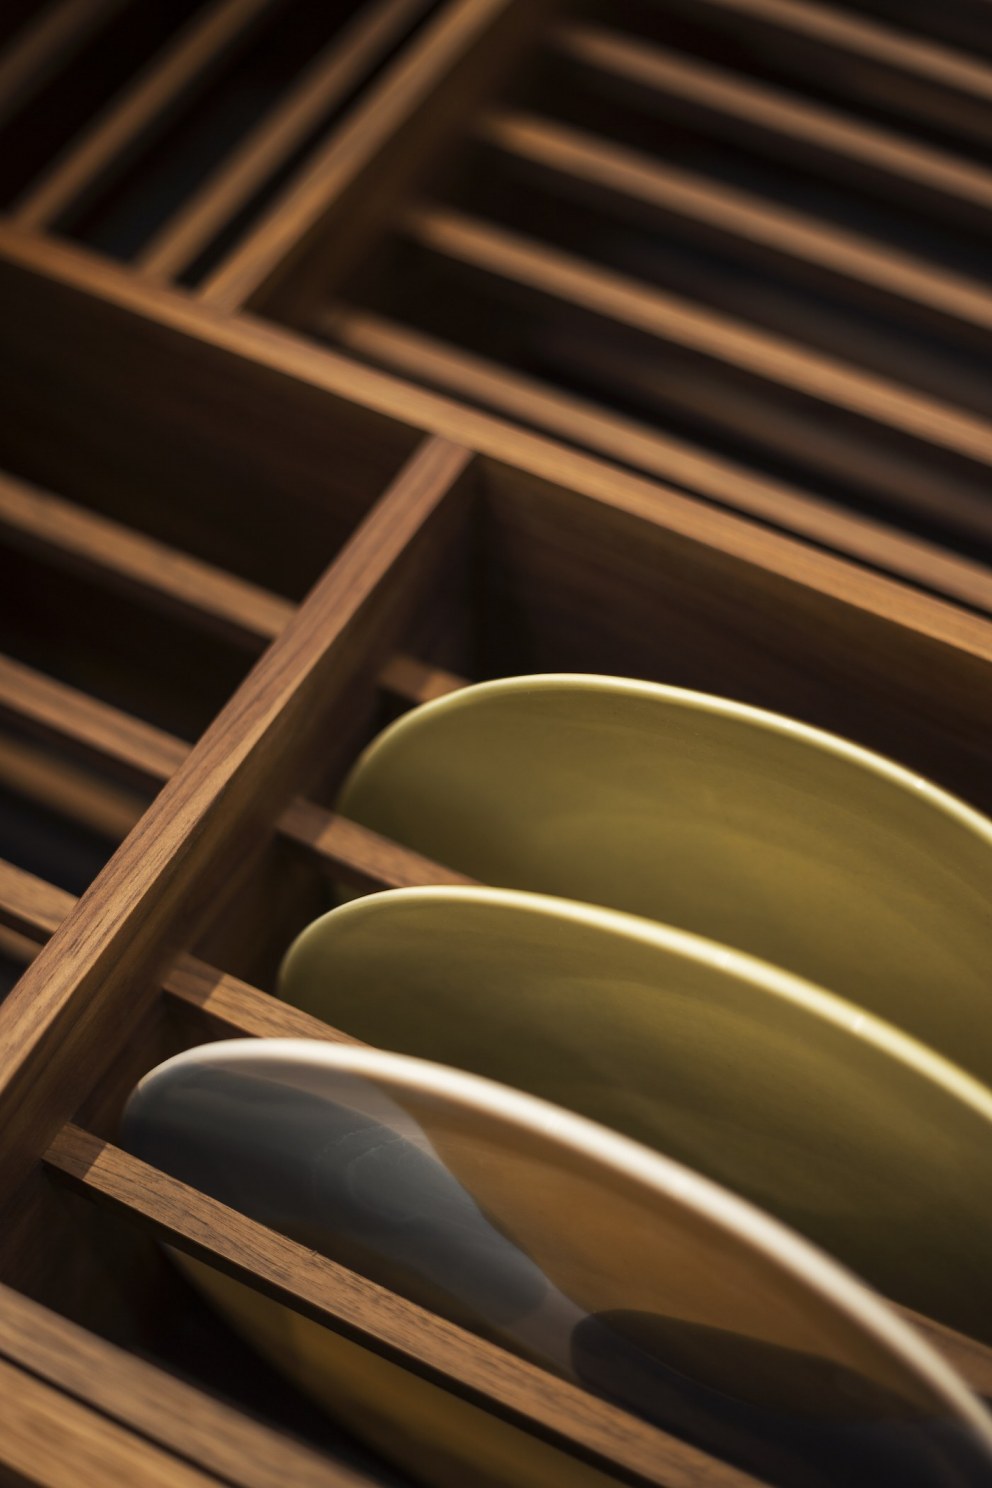 3000 sqft Townhouse - Highgate | Dovetailed walnut plate drawer detail in bespoke kitchen  | Interior Designers